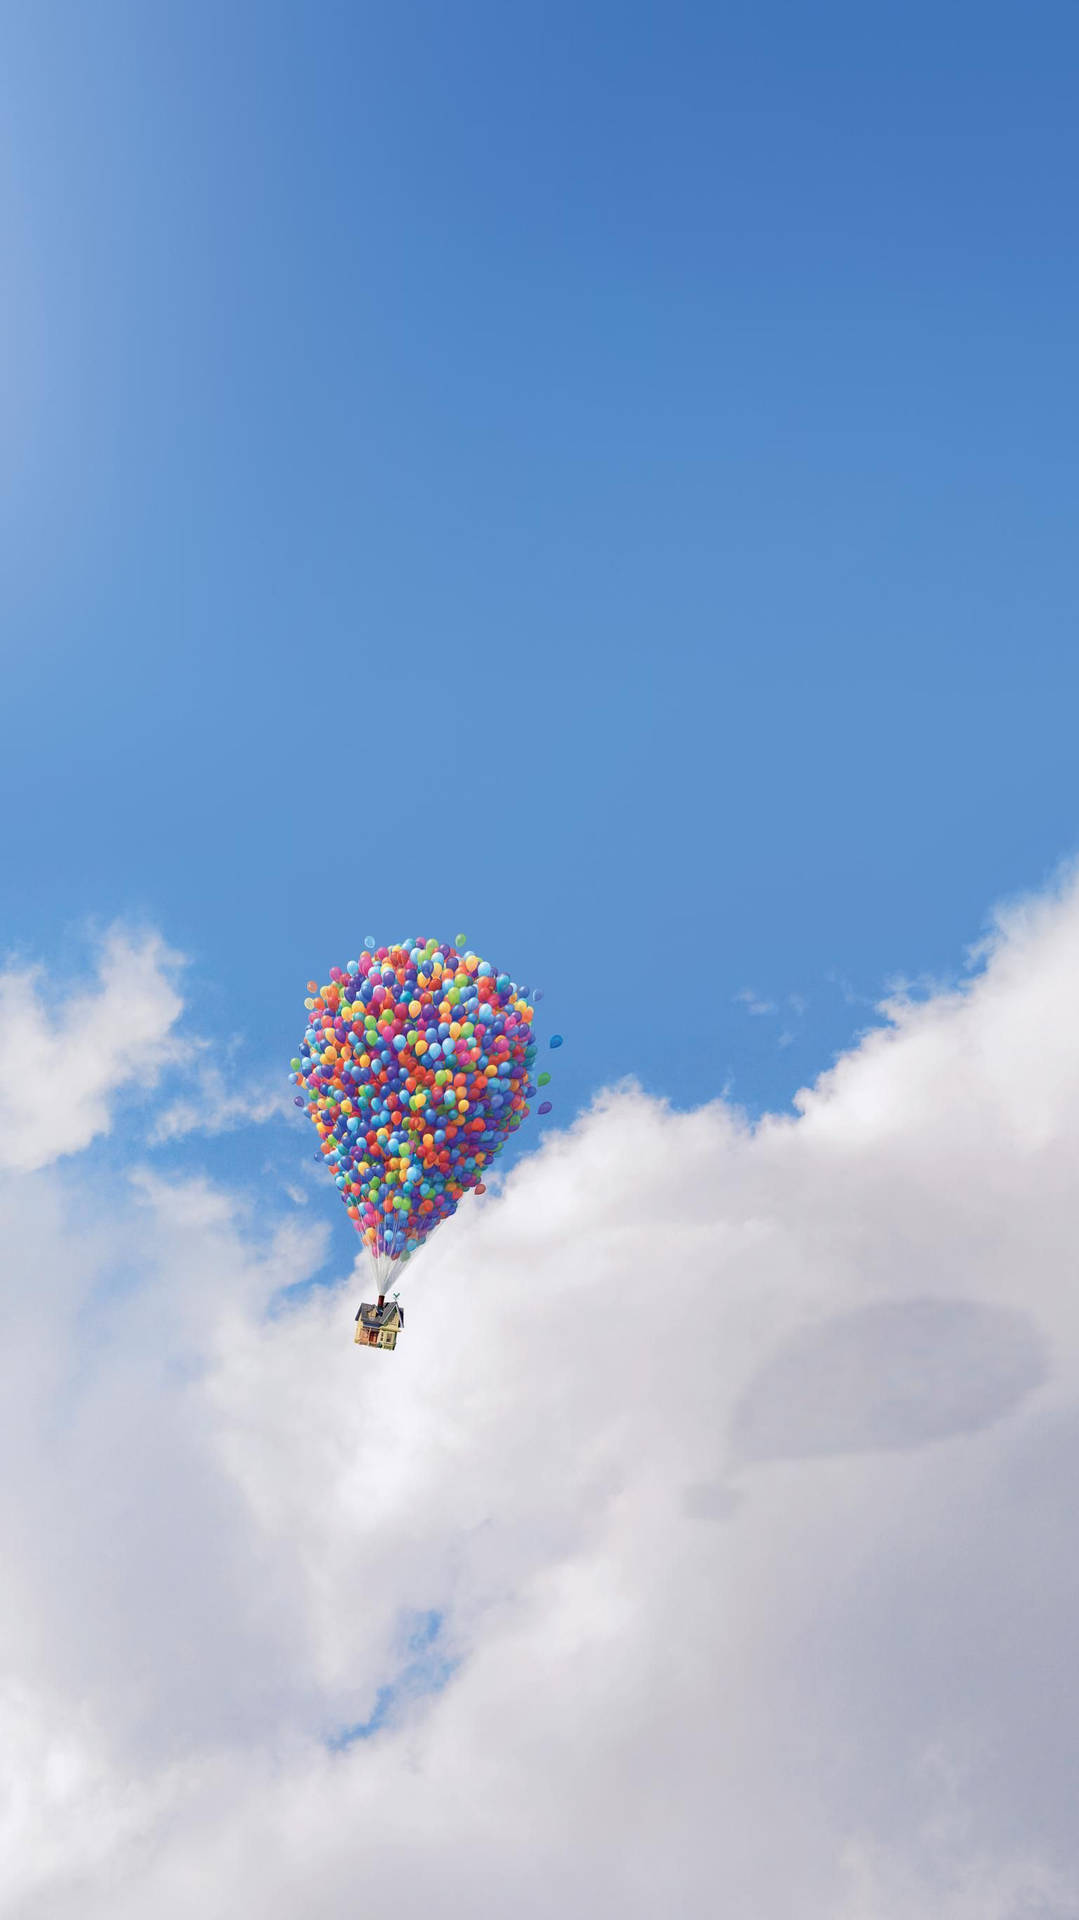 Disney Up Movie Balloons Background